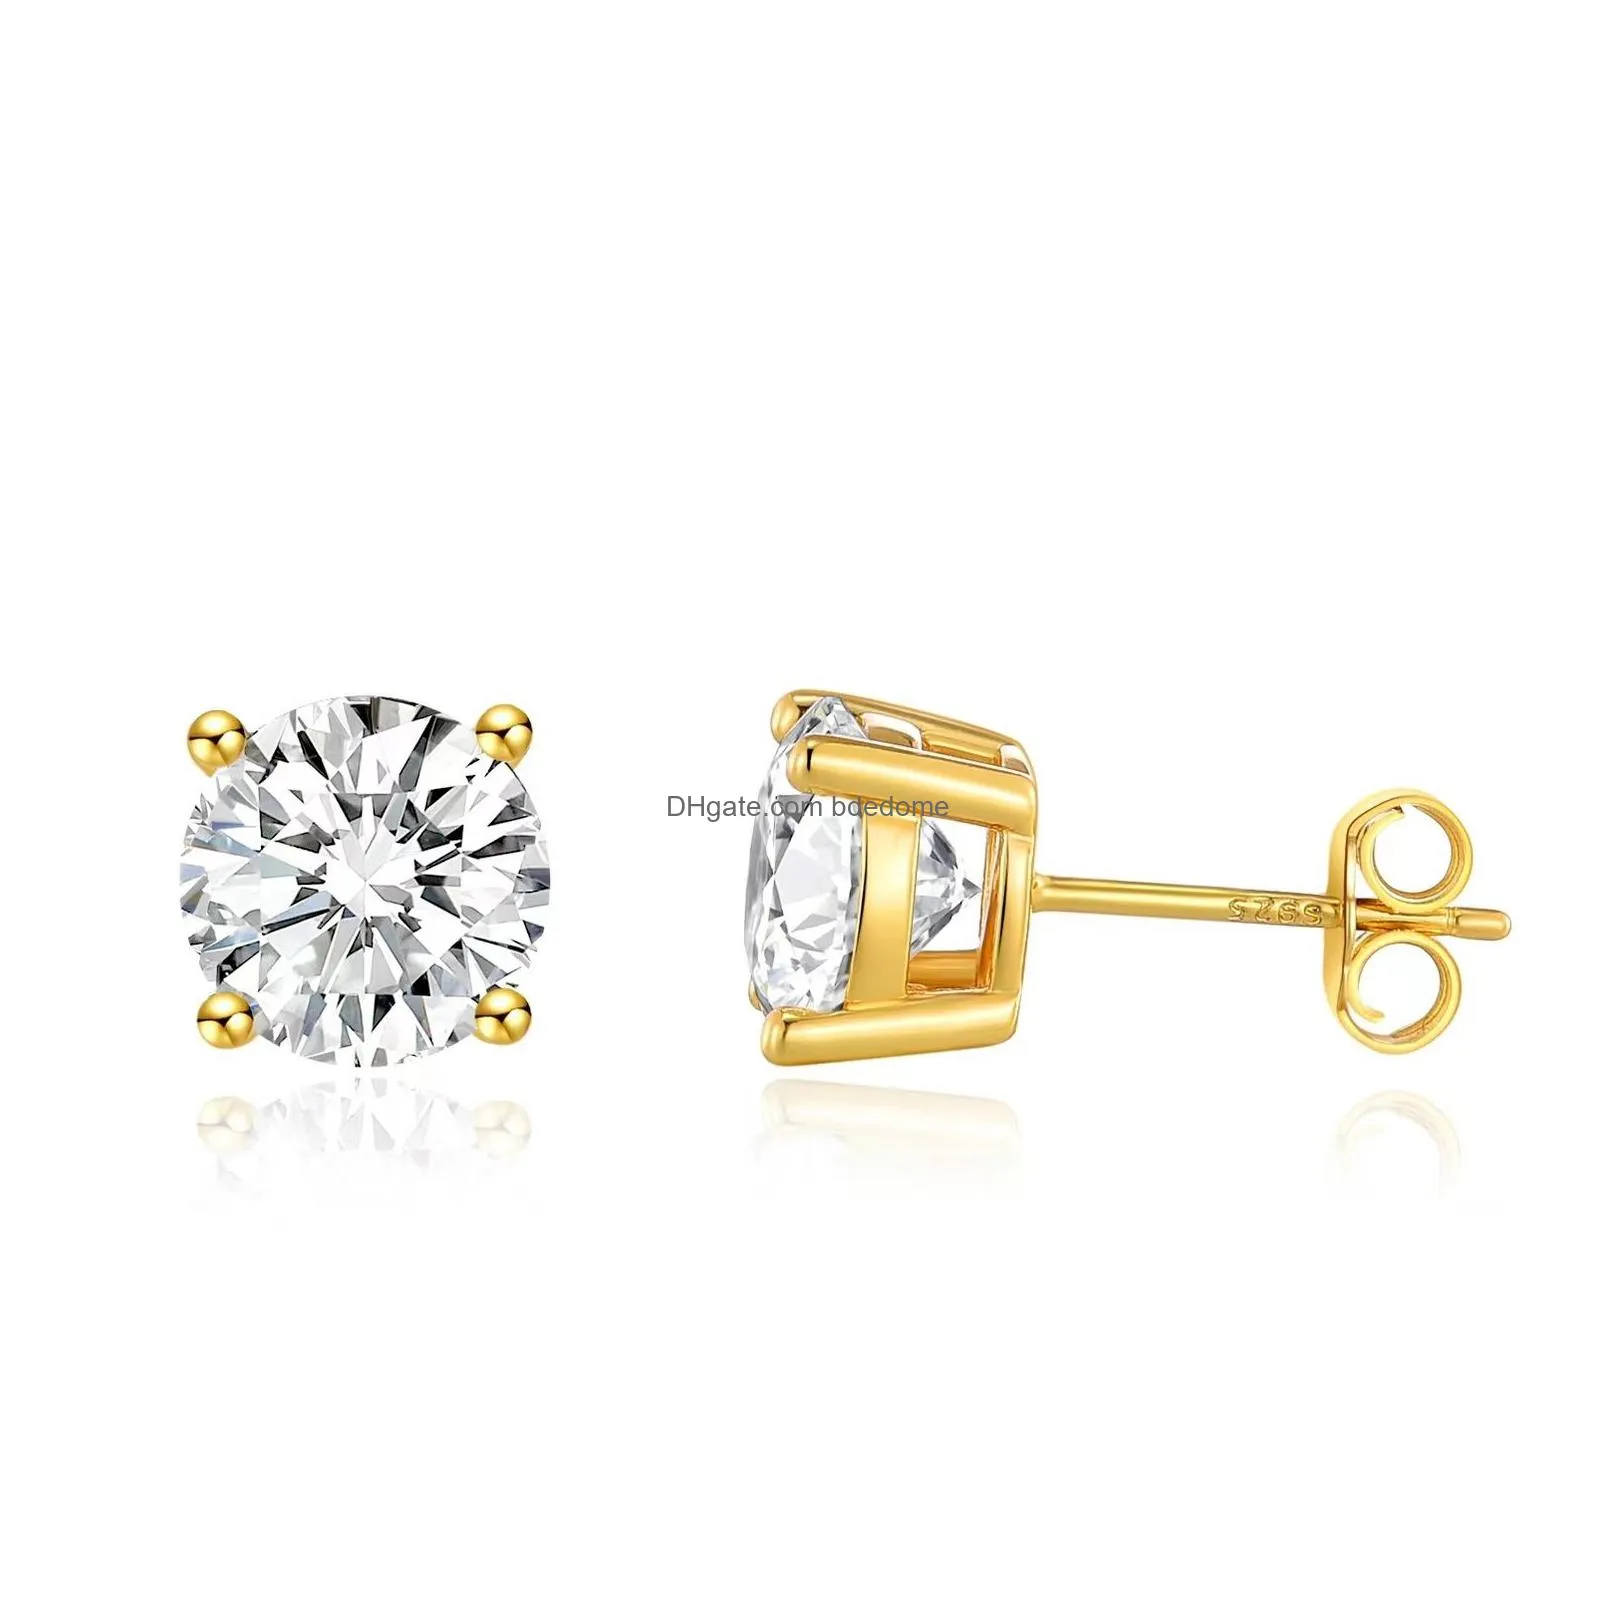 charm diamond 925 silver plated platinumplated 18k gold stud earring bulk order custom earrings with jewelry gift box 221119